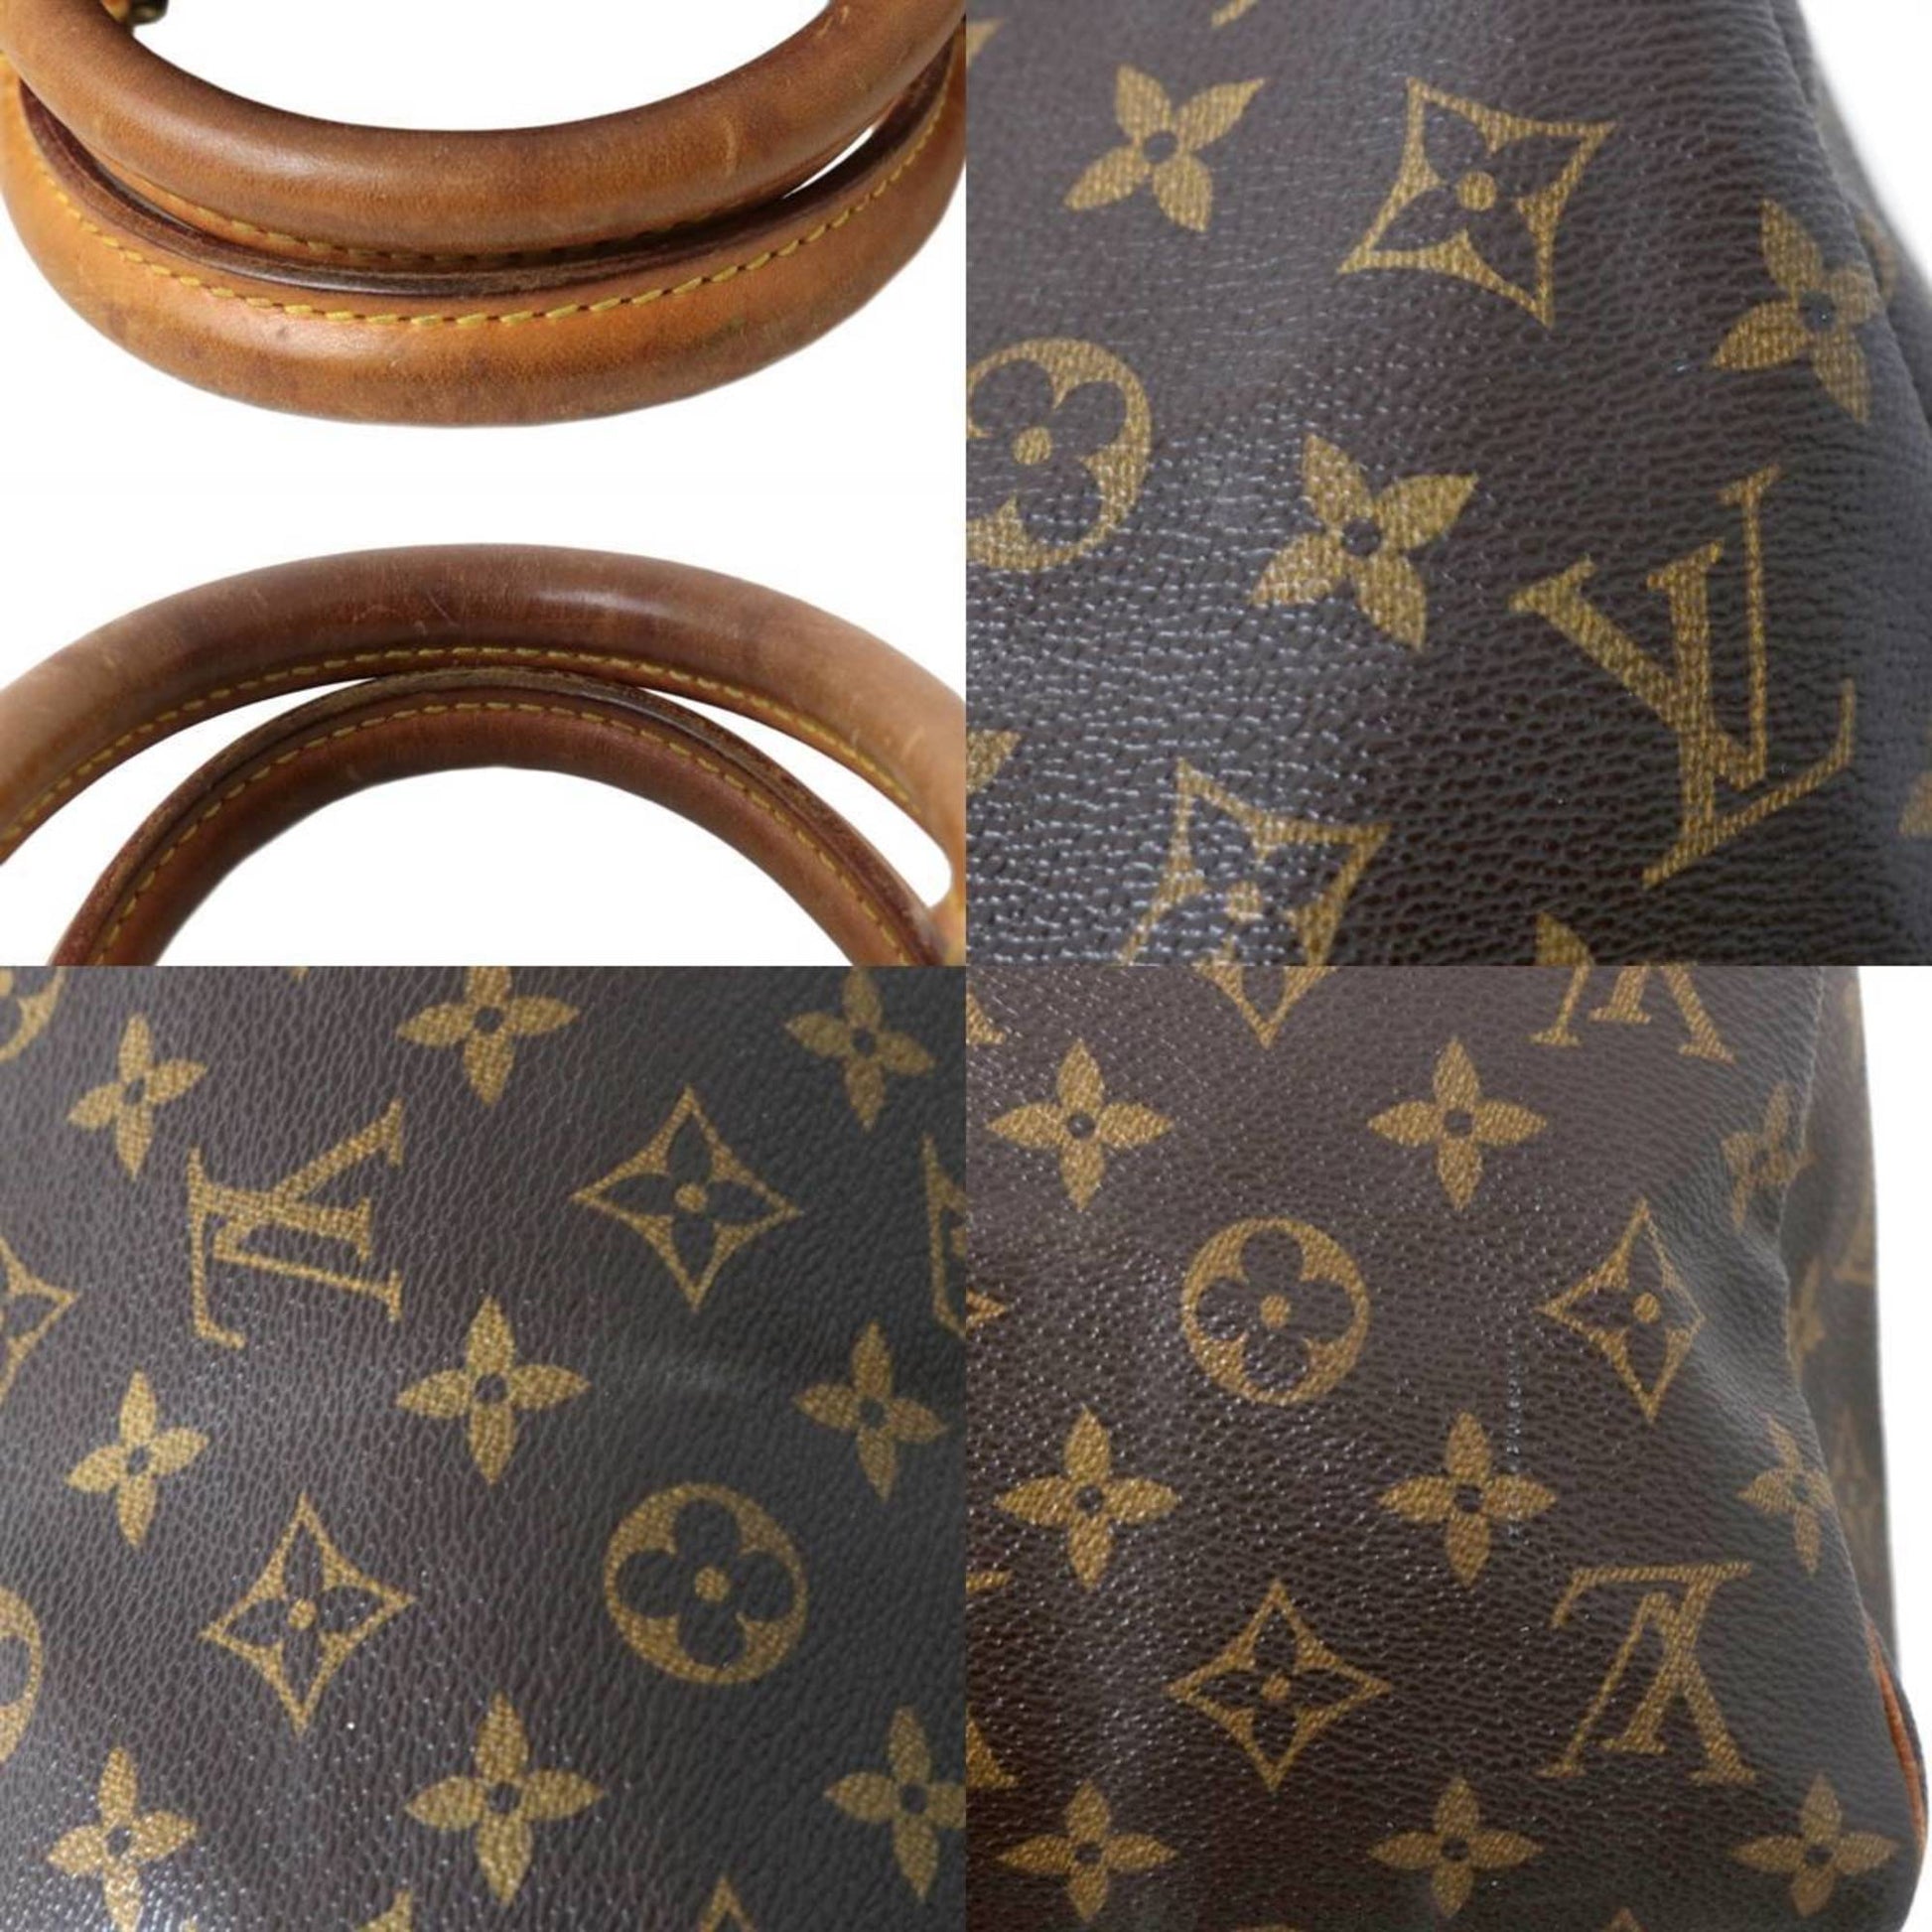 Bag - Louis - 30 - Vuitton - Boston - Monogram - Speedy - Bag - ep_vintage  luxury Store - M41526 – dct - Louis Vuitton Bastille shoulder bag in ebene  damier canvas and brown leather - Hand